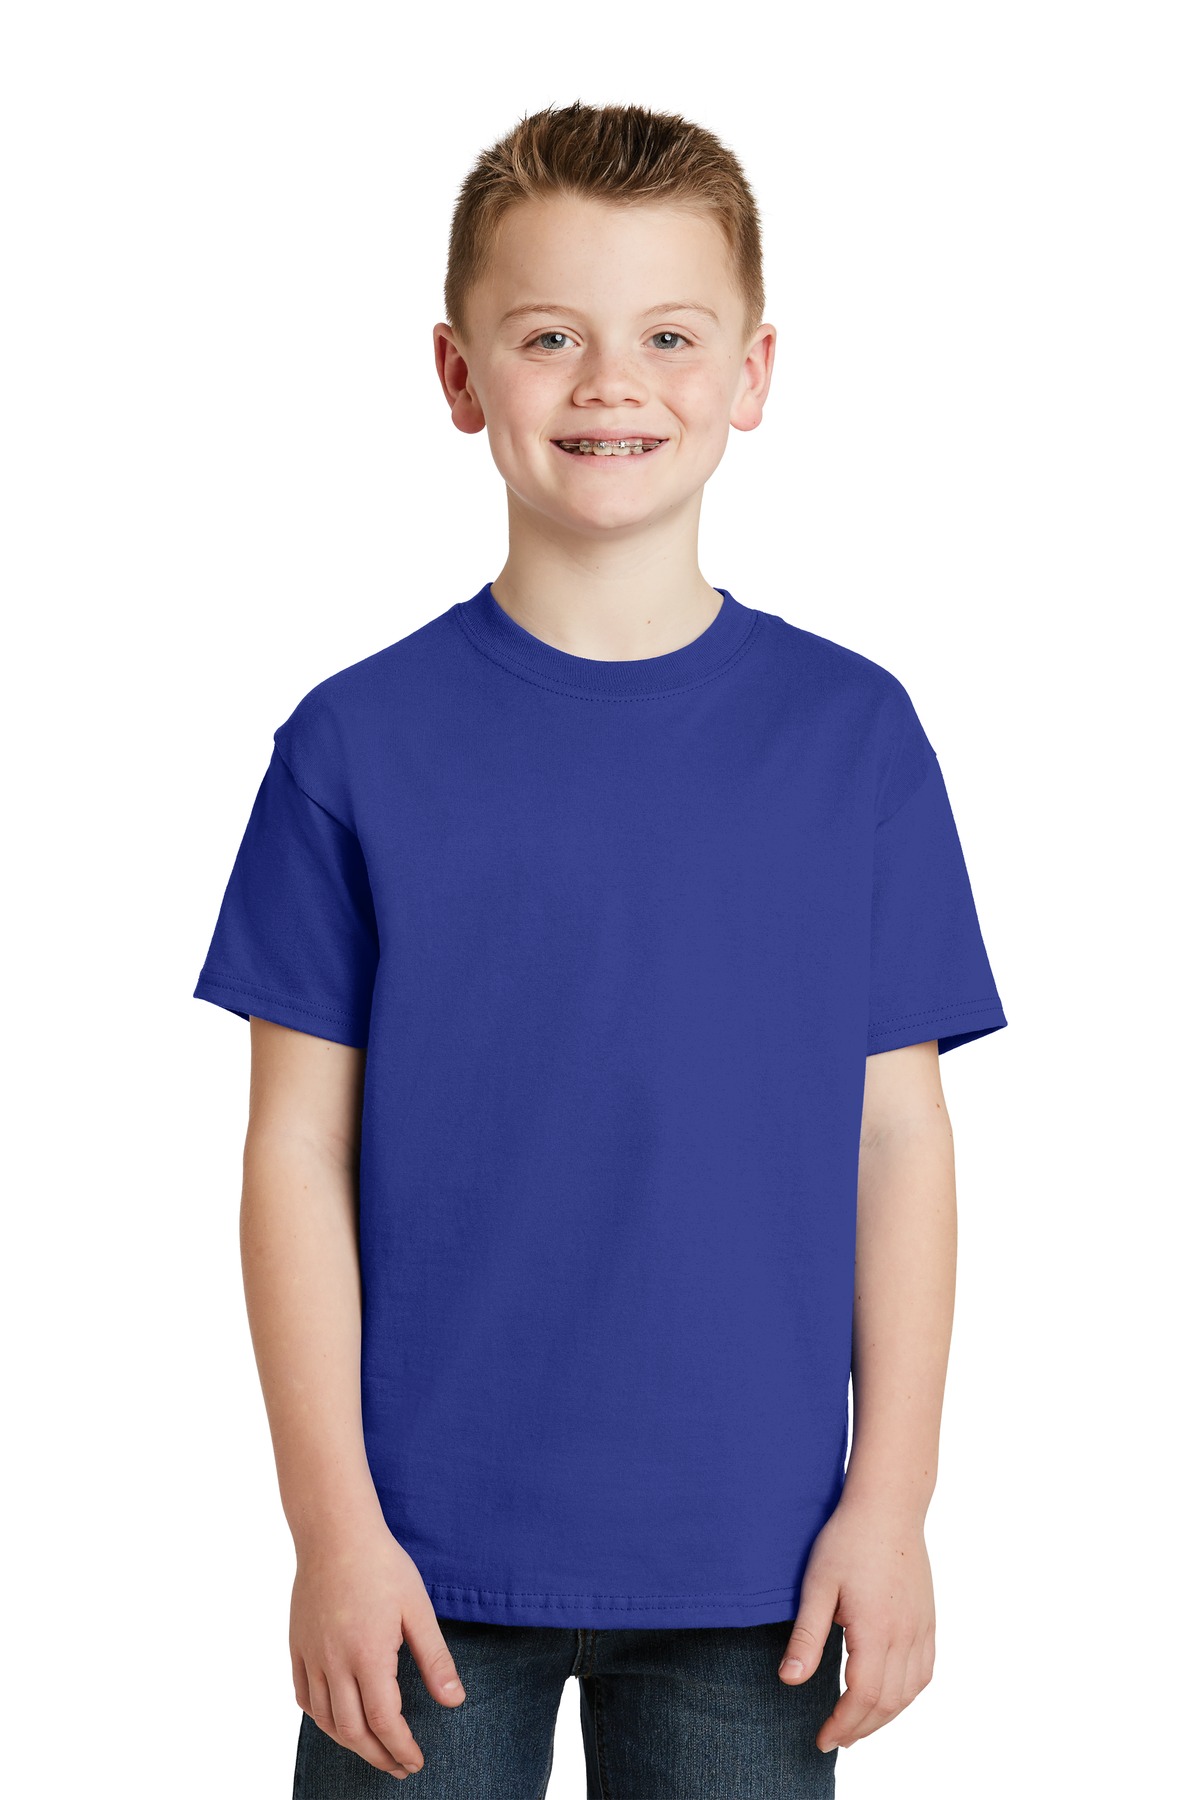 Boys' Tagless Short Sleeve T-Shirt - image 1 of 3